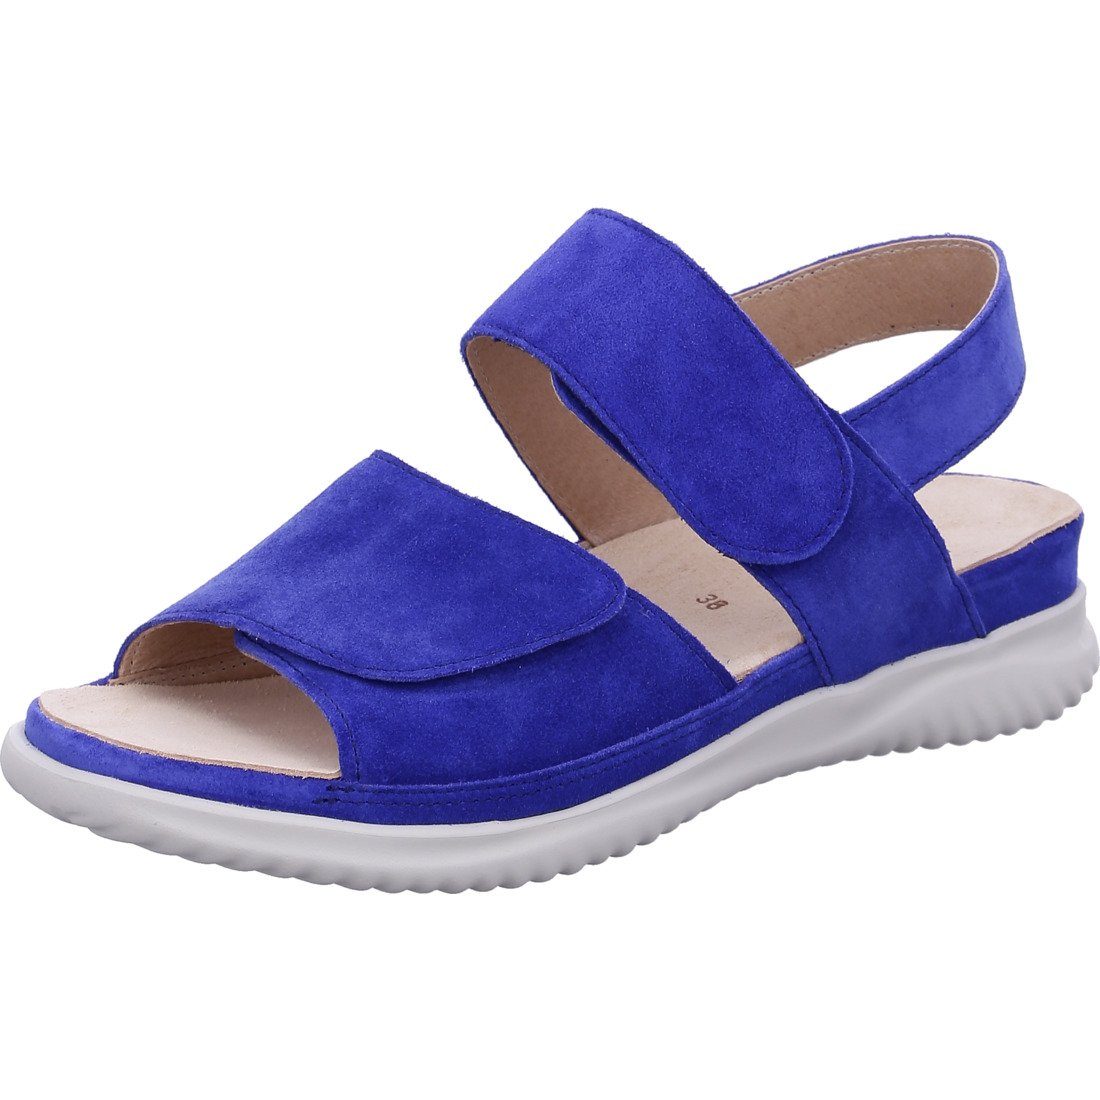 Hartjes Hartjes Schuhe, Sandalette Breeze - Nubuk Damen Sandalette blau 048724